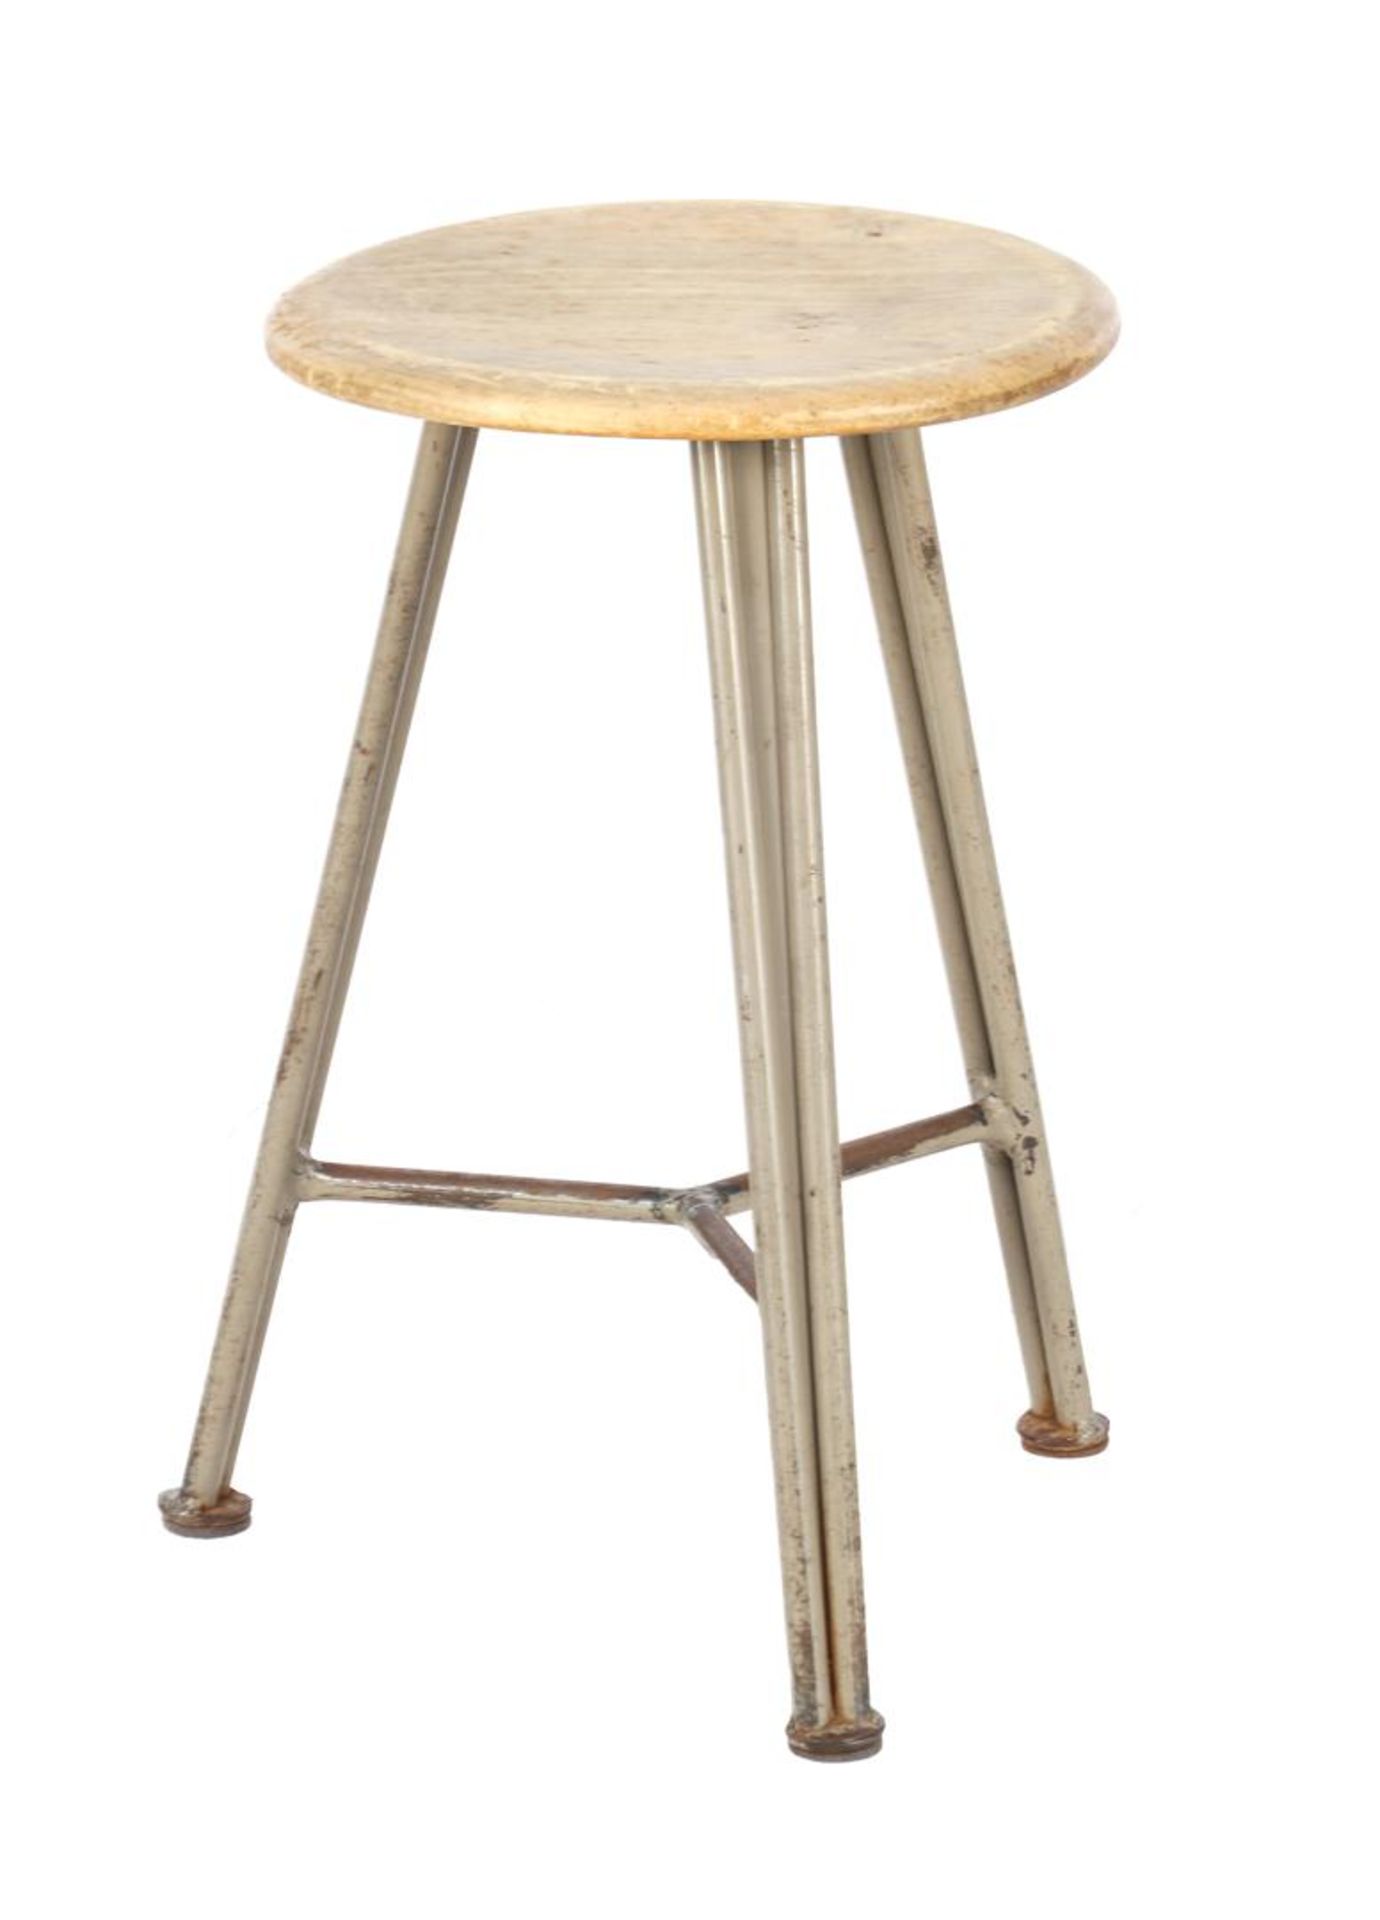 Iron stool with beech wood seat